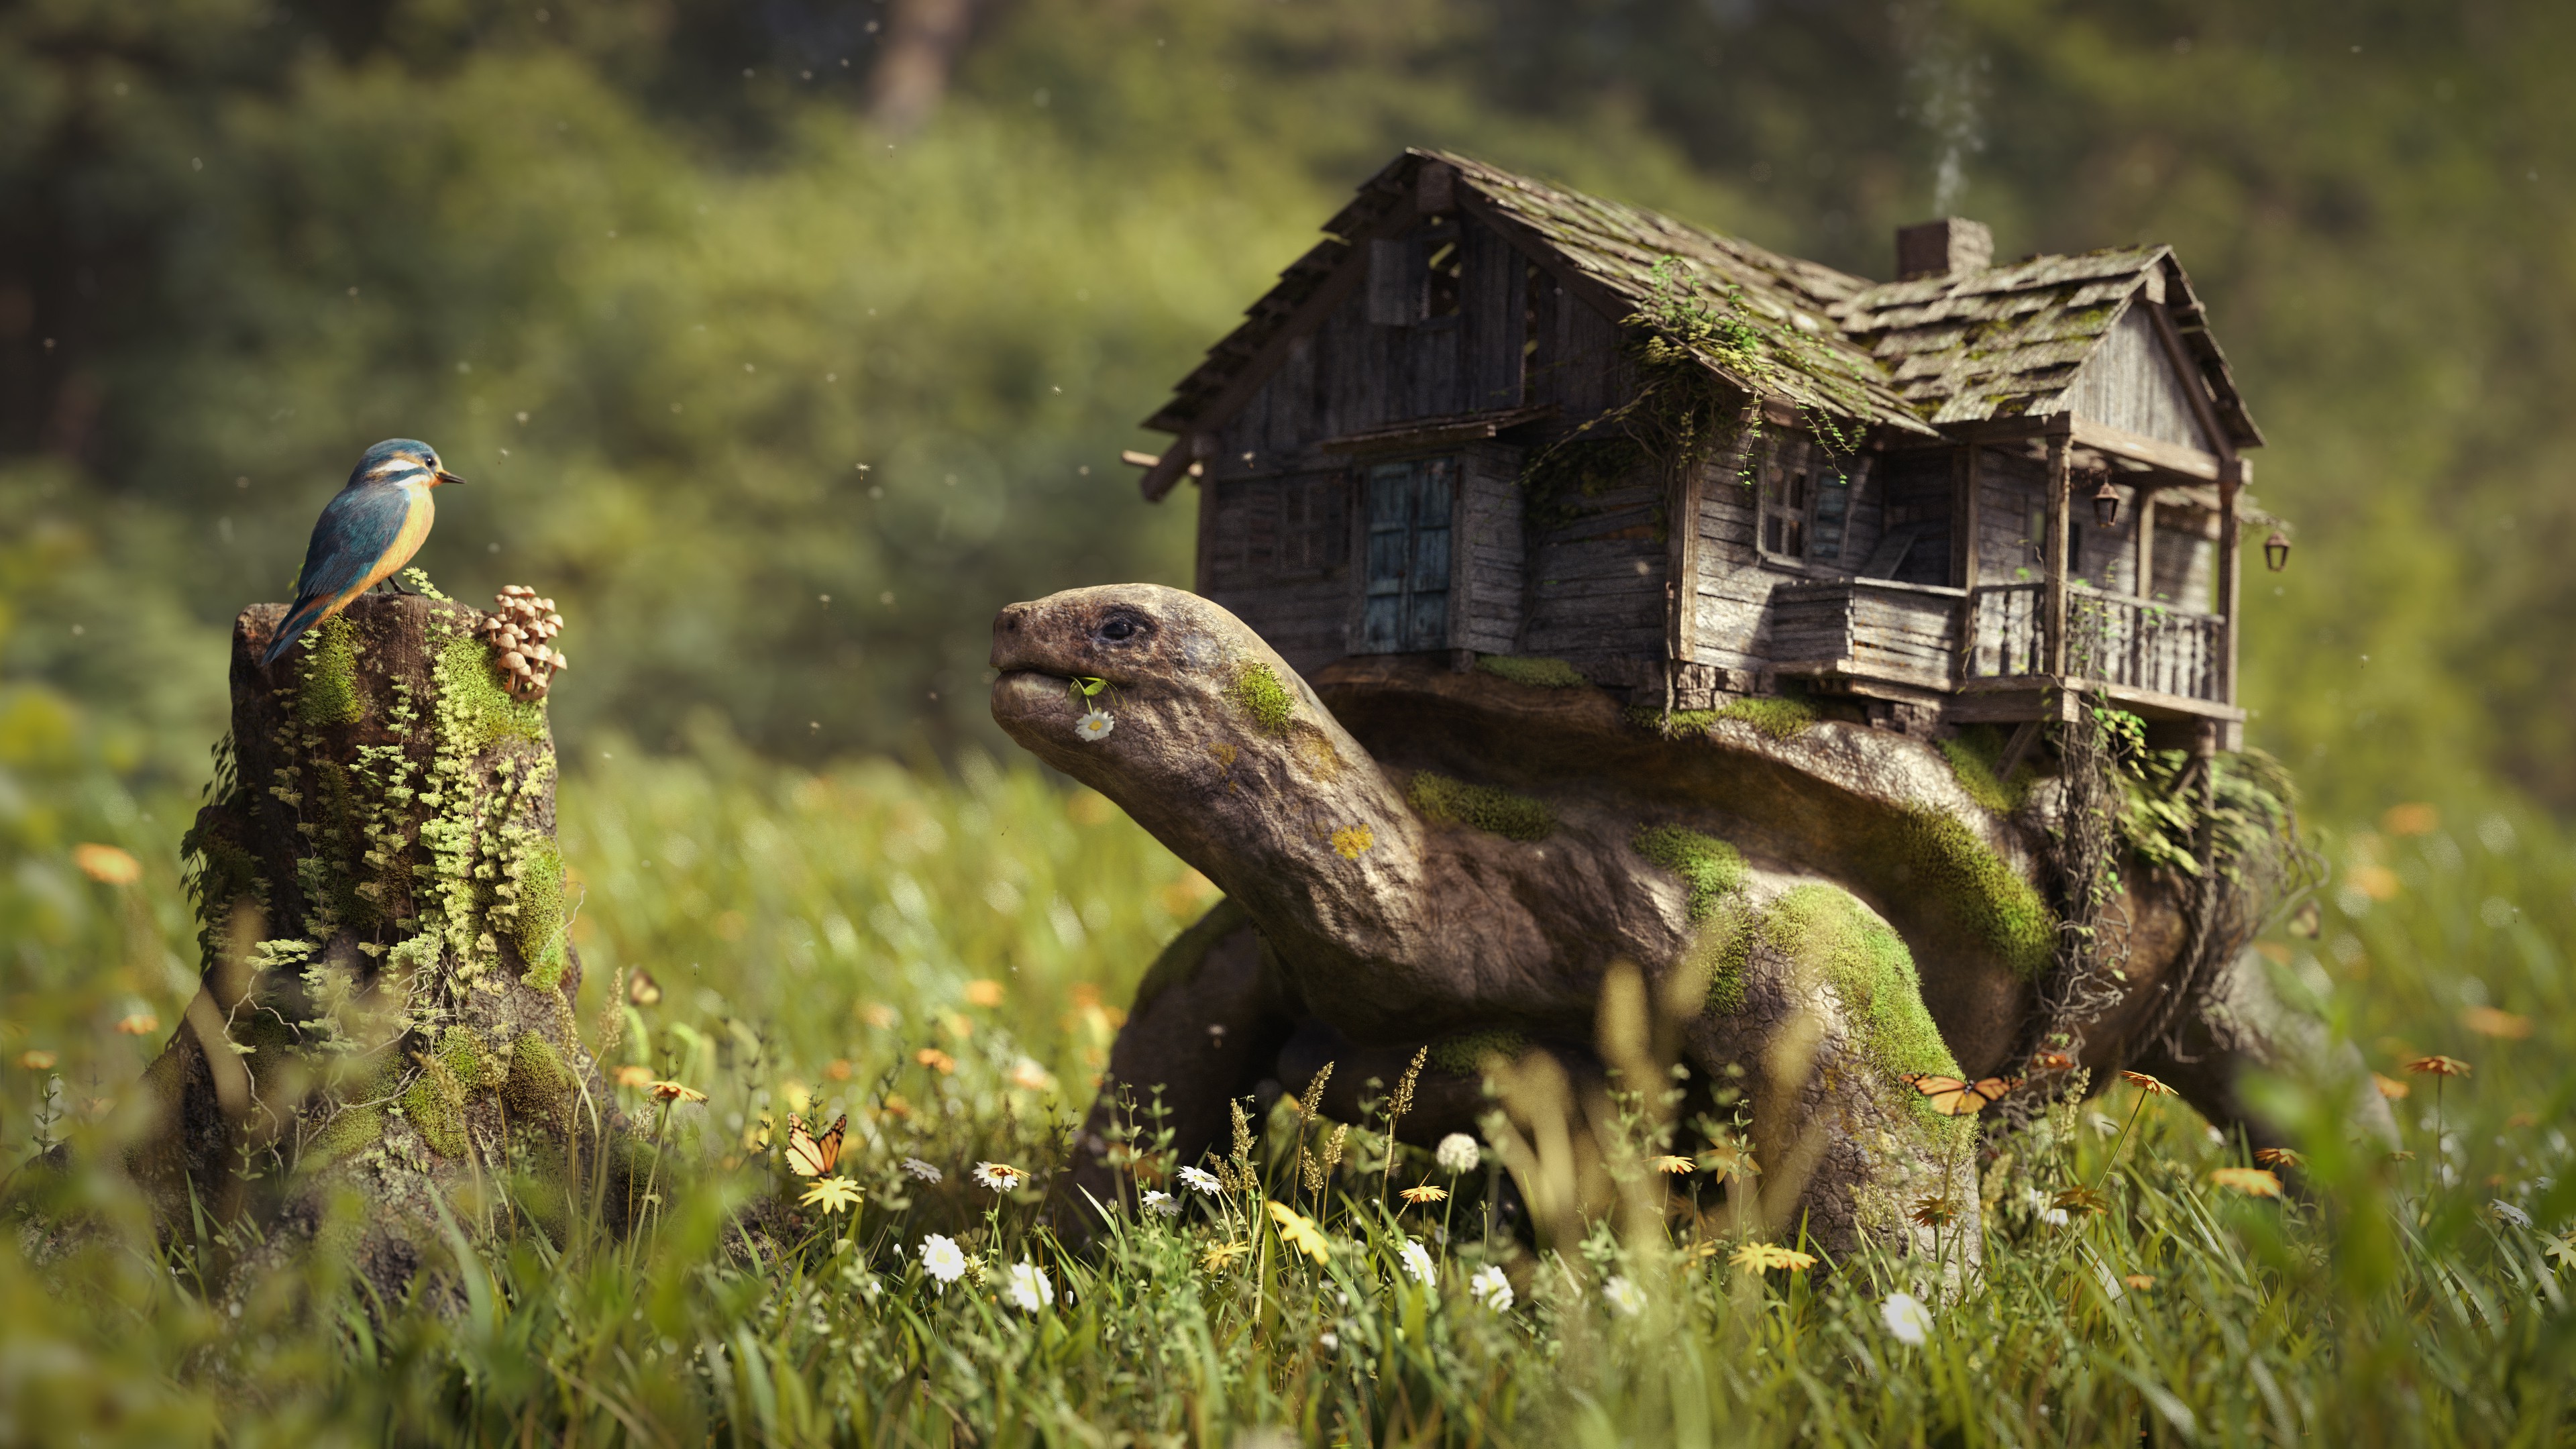 Digital Art Animals Photography Photoshopped Nature Grass